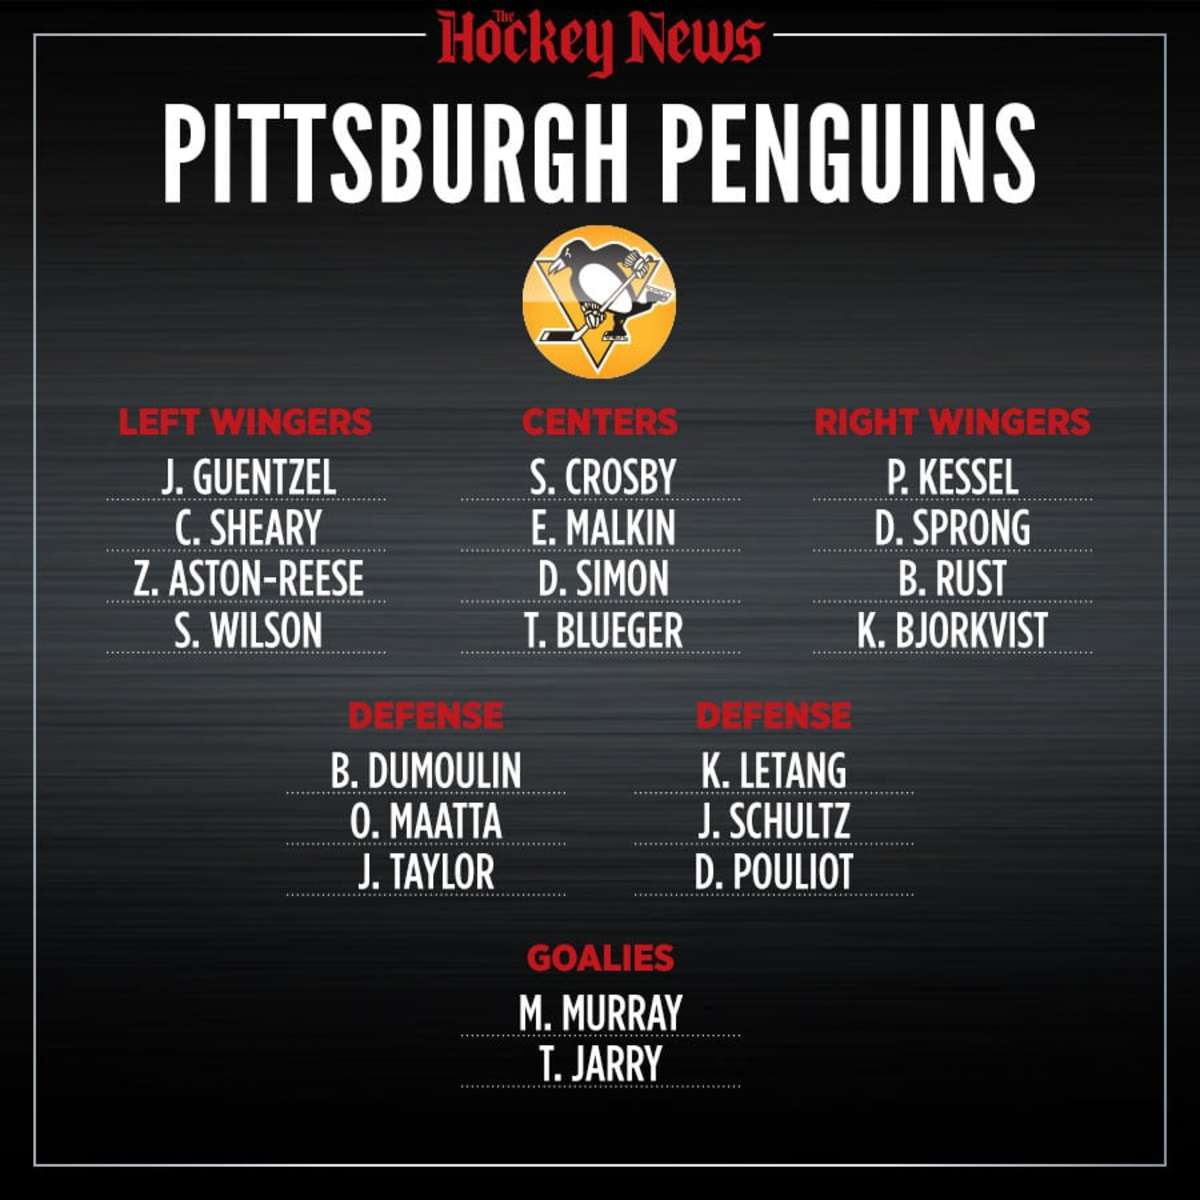 Pittsburgh Penguins Depth Chart 2017